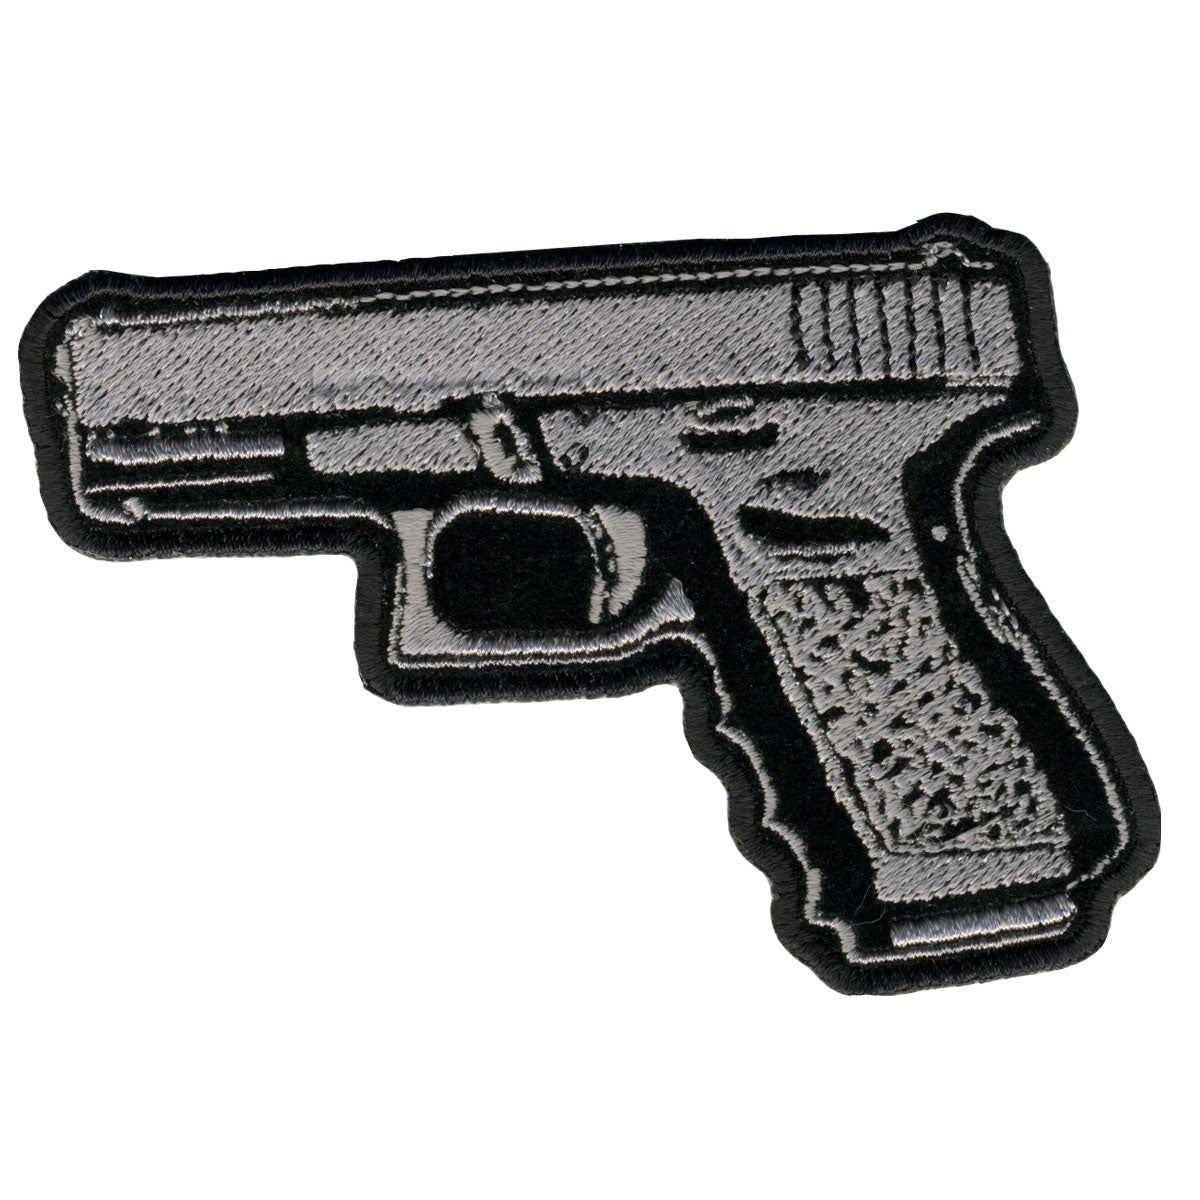 Hot Leathers PPA5800 Pistol 4" x 3" Patch